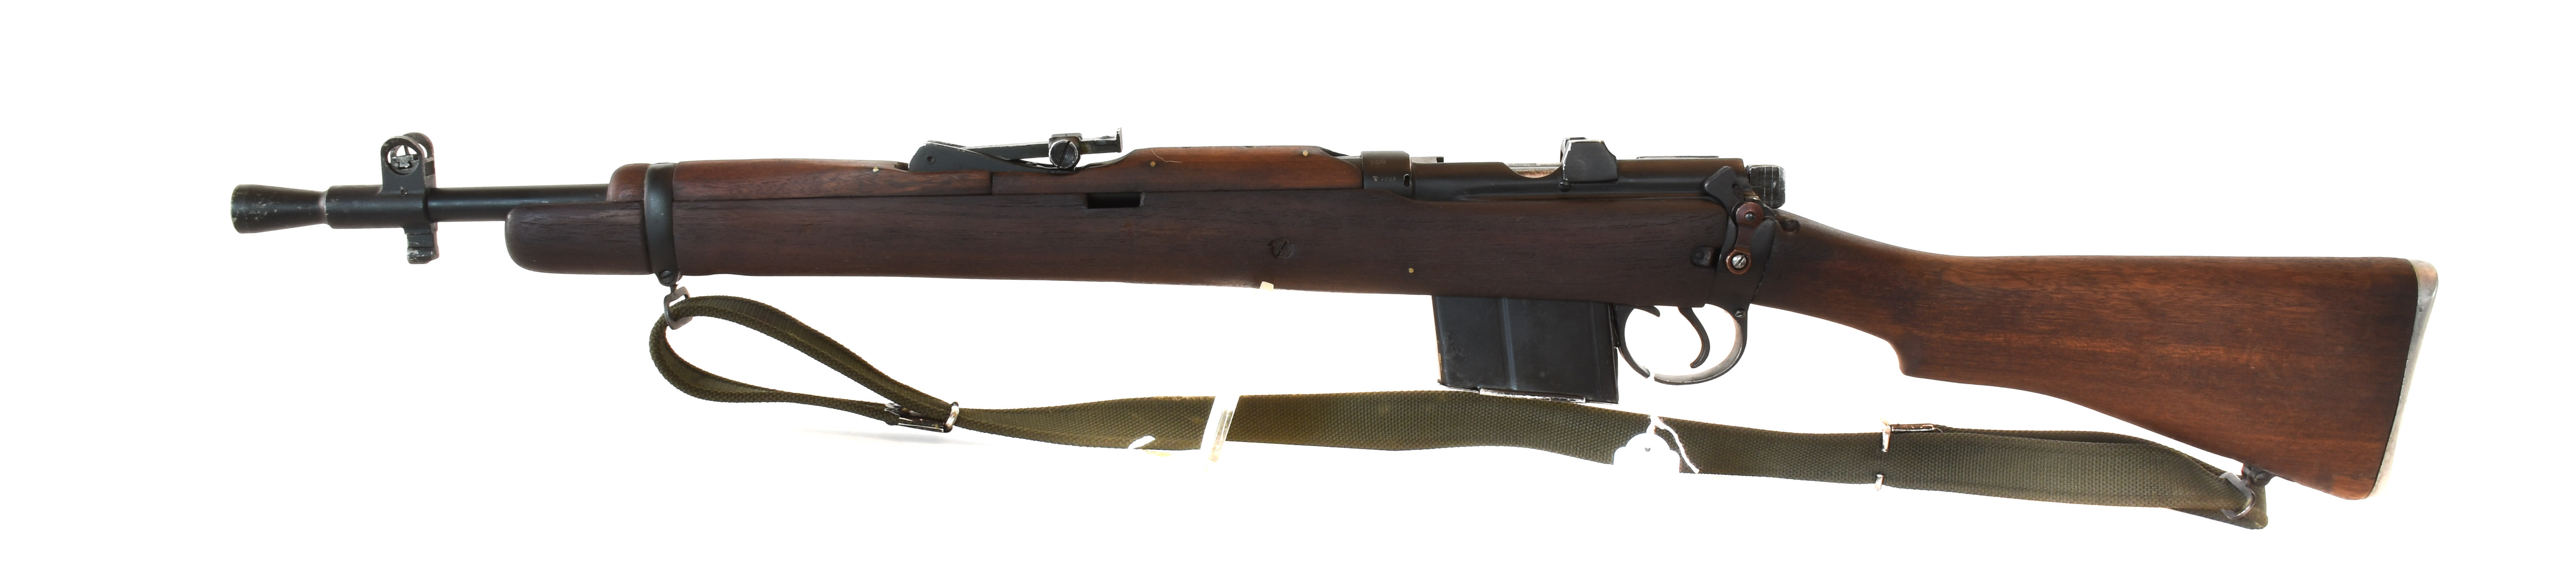 Lee-Enfield, Rifle M2A1 "Jungle Carbine", Ishapore, .308 Win.., #...